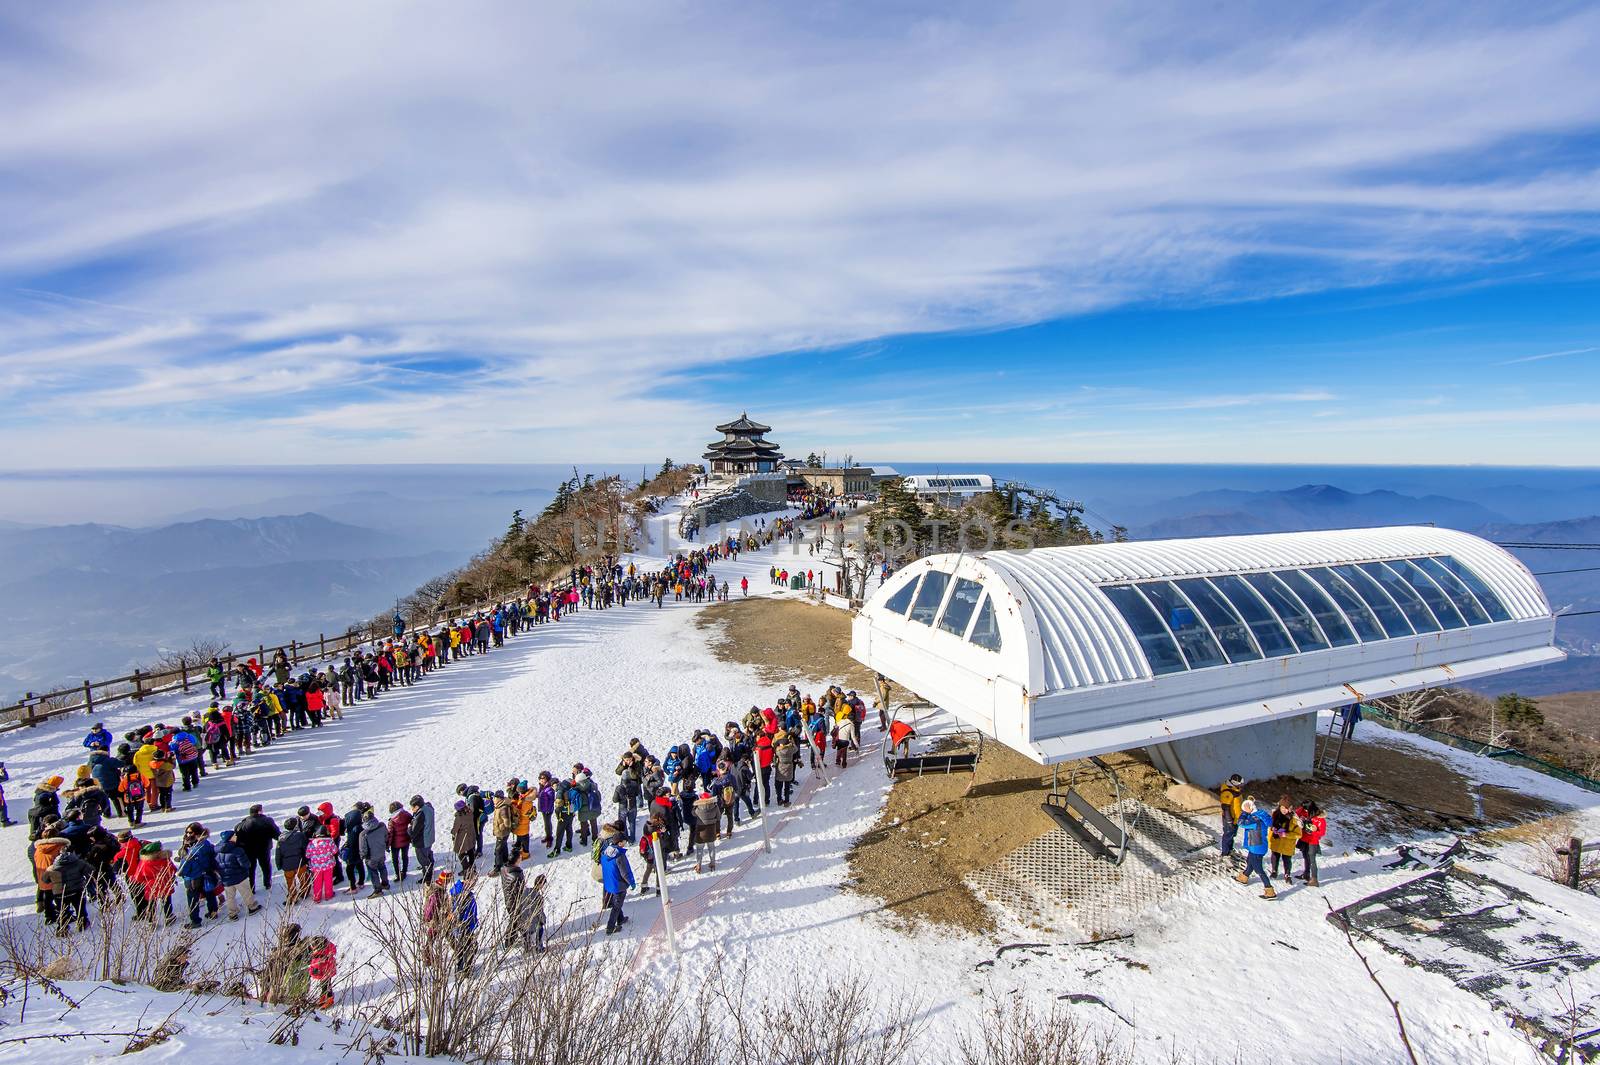 DEOGYUSAN,KOREA - JANUARY 1: Tourists taking photos of the beautiful scenery and skiing around Deogyusan,South Korea on January 1, 2016.